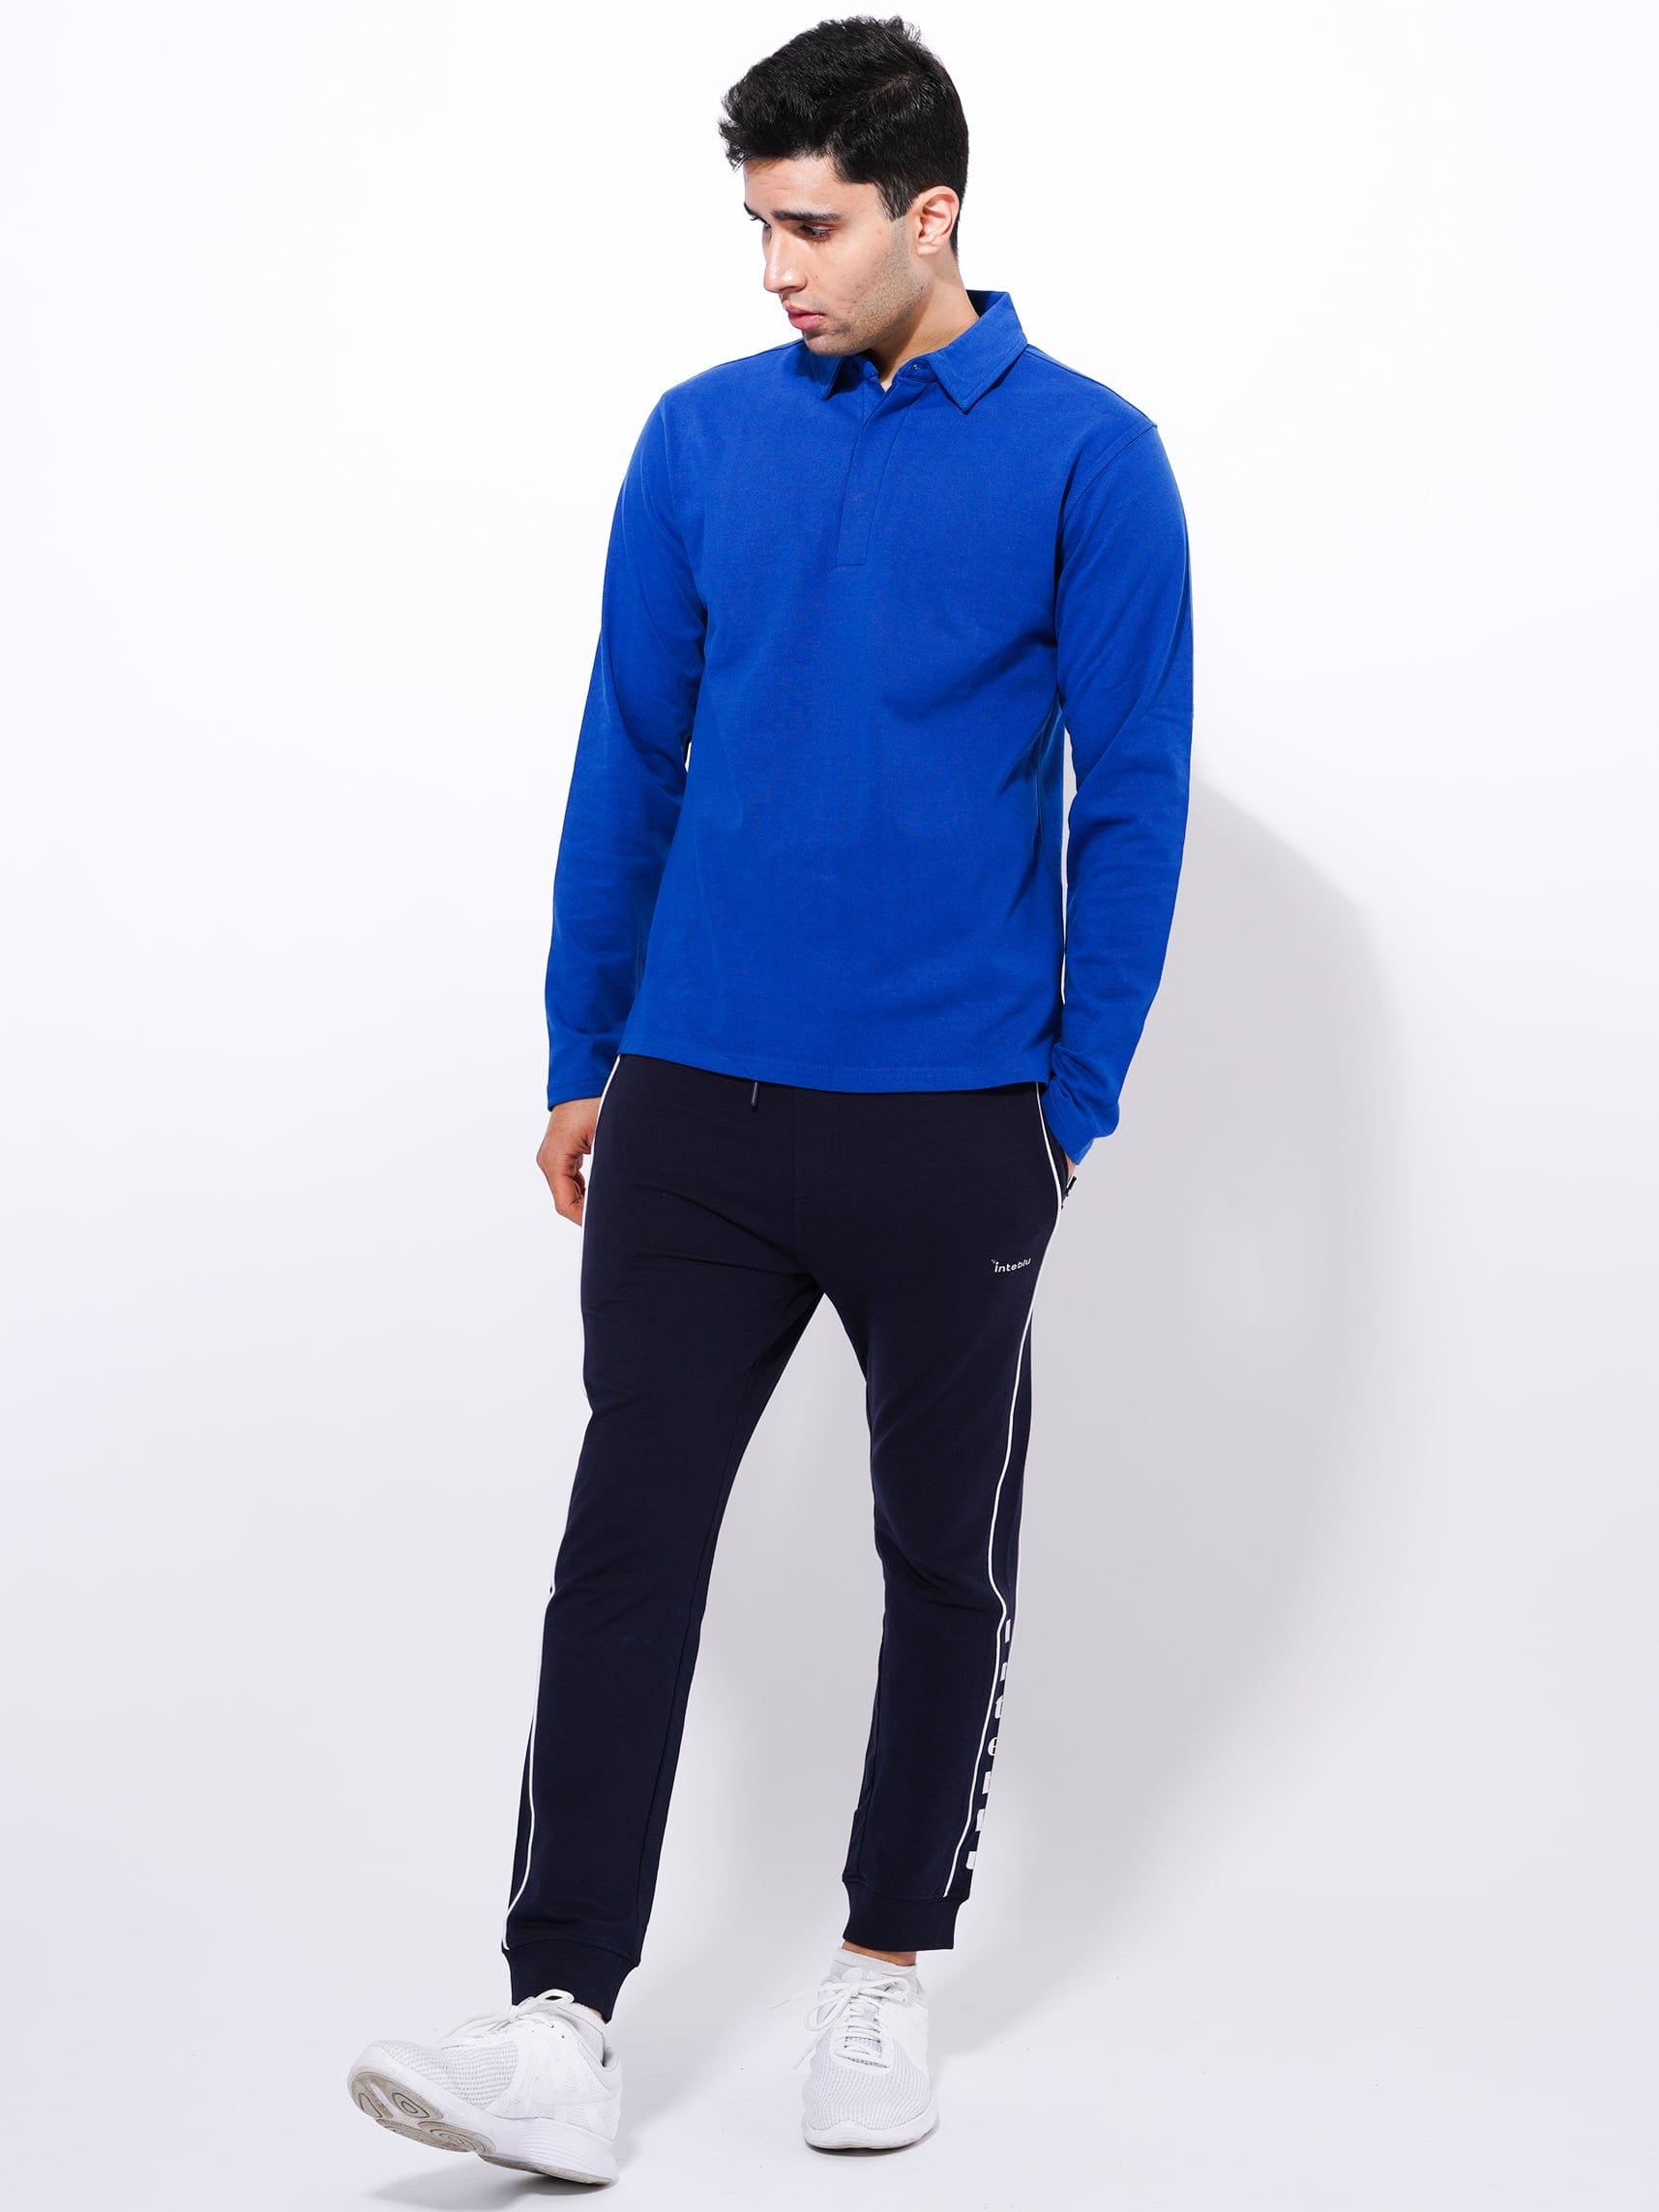 Men's Long Sleeve Player's  Zipper Polo Shirt | Blue Color - inteblu